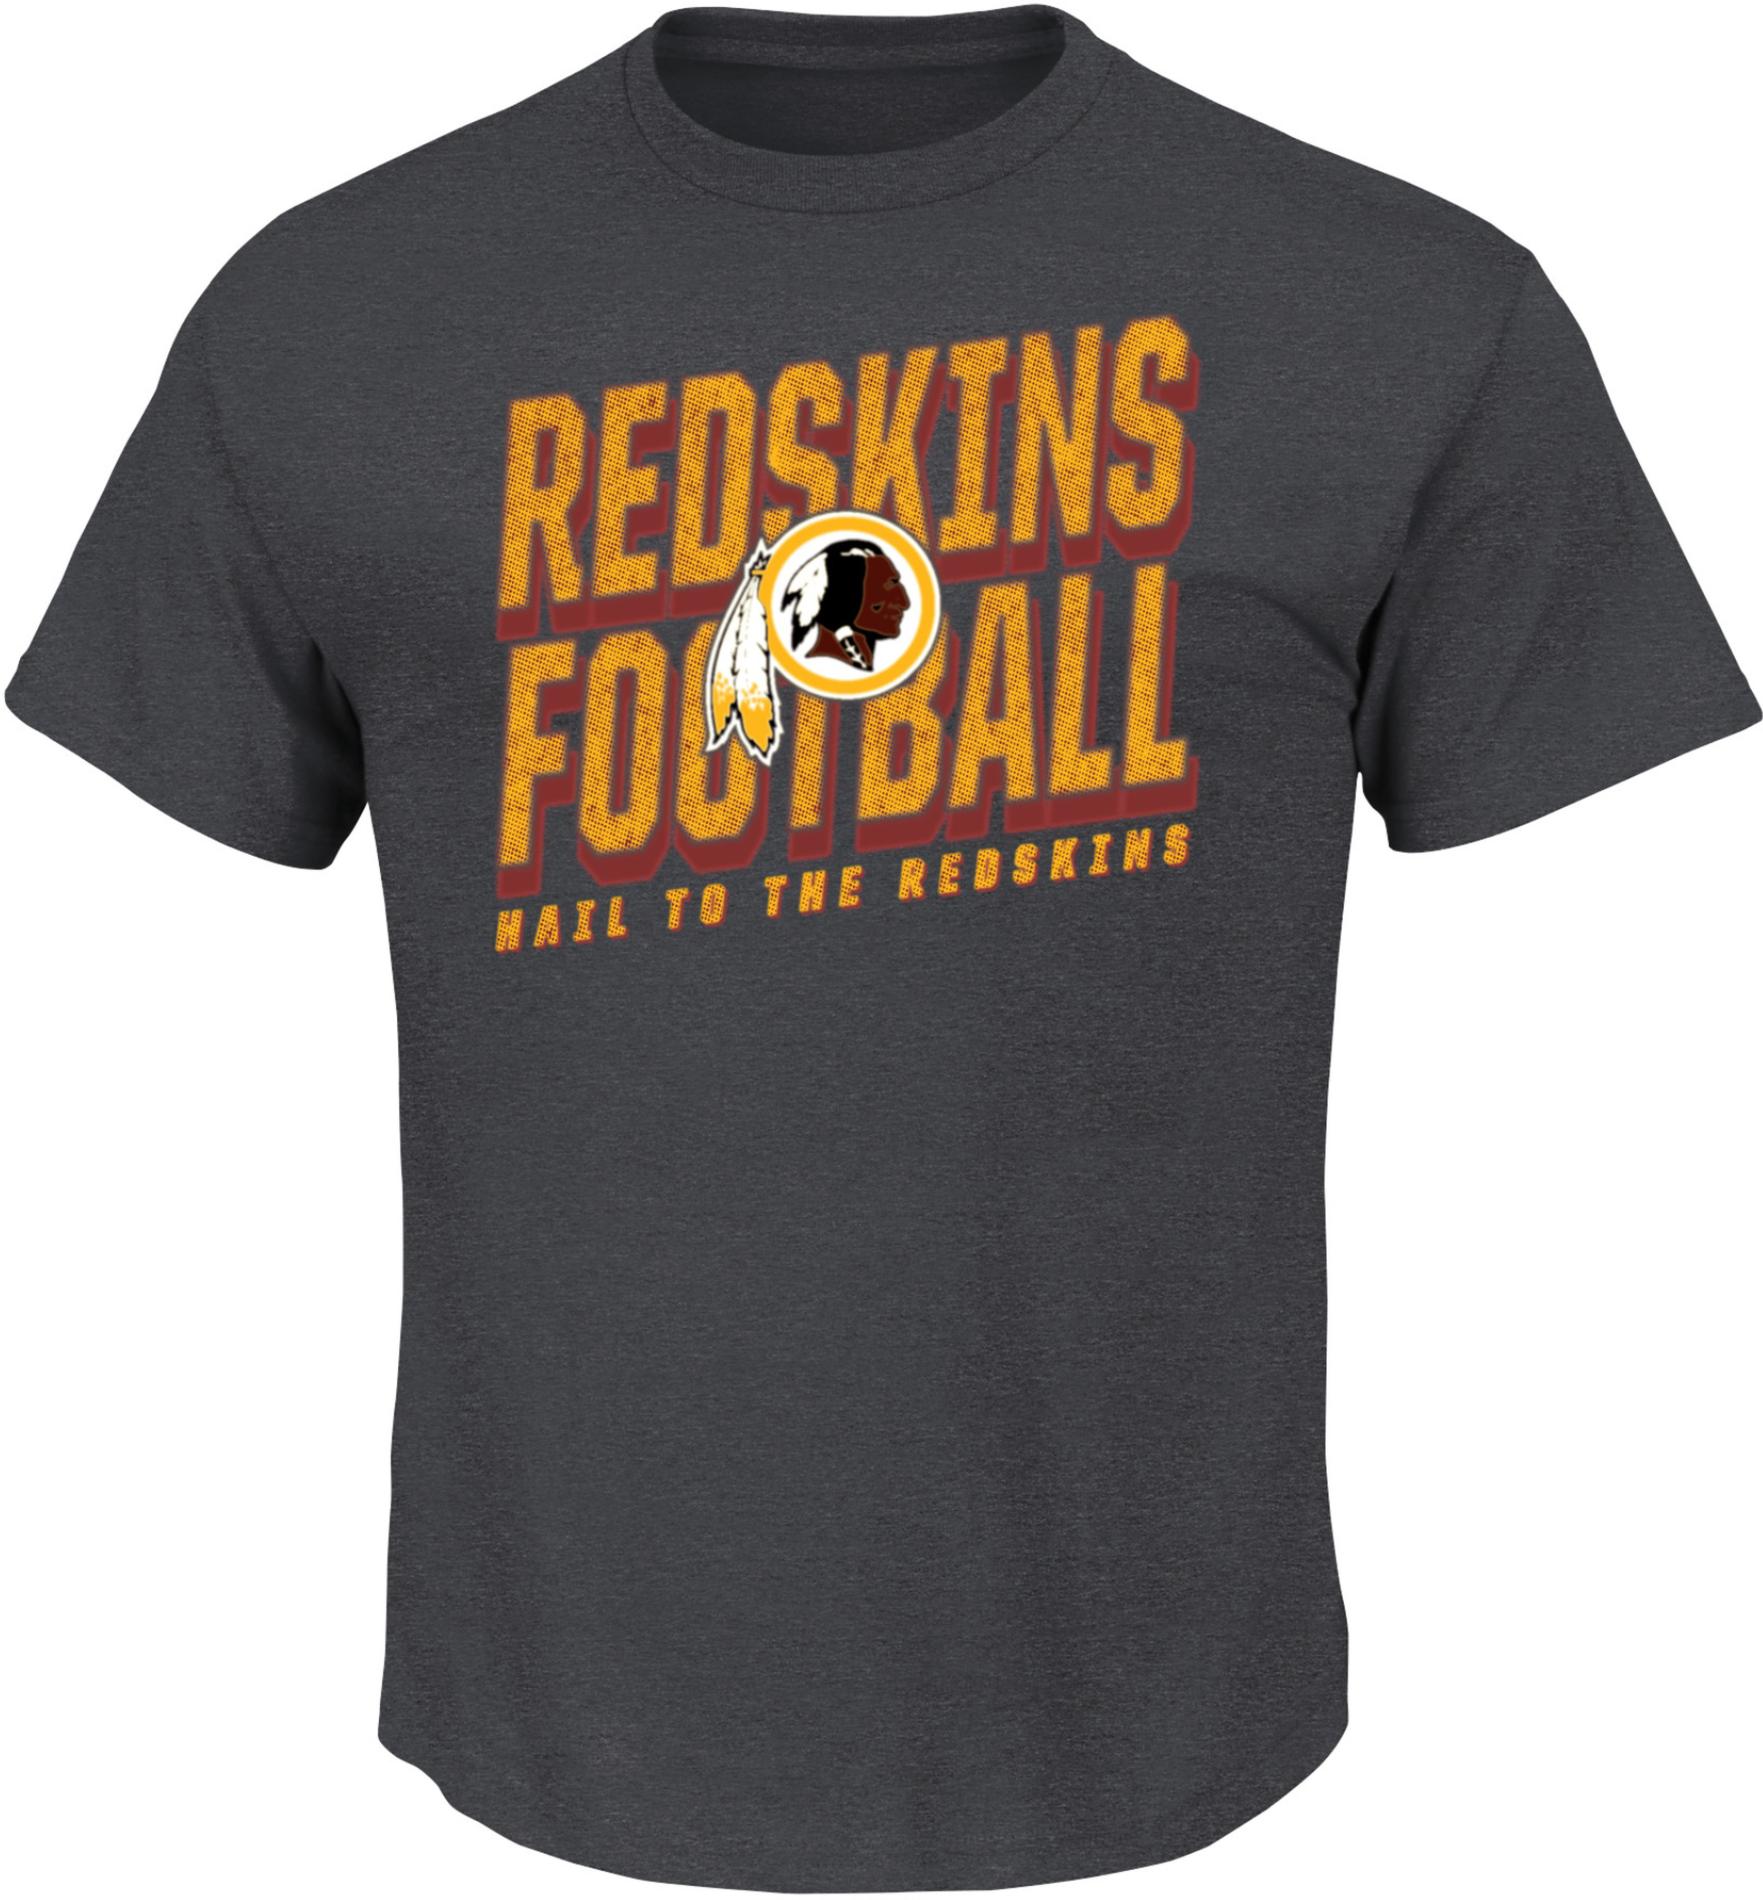 NFL Men's Short-Sleeve T-Shirt - Washington Redskins